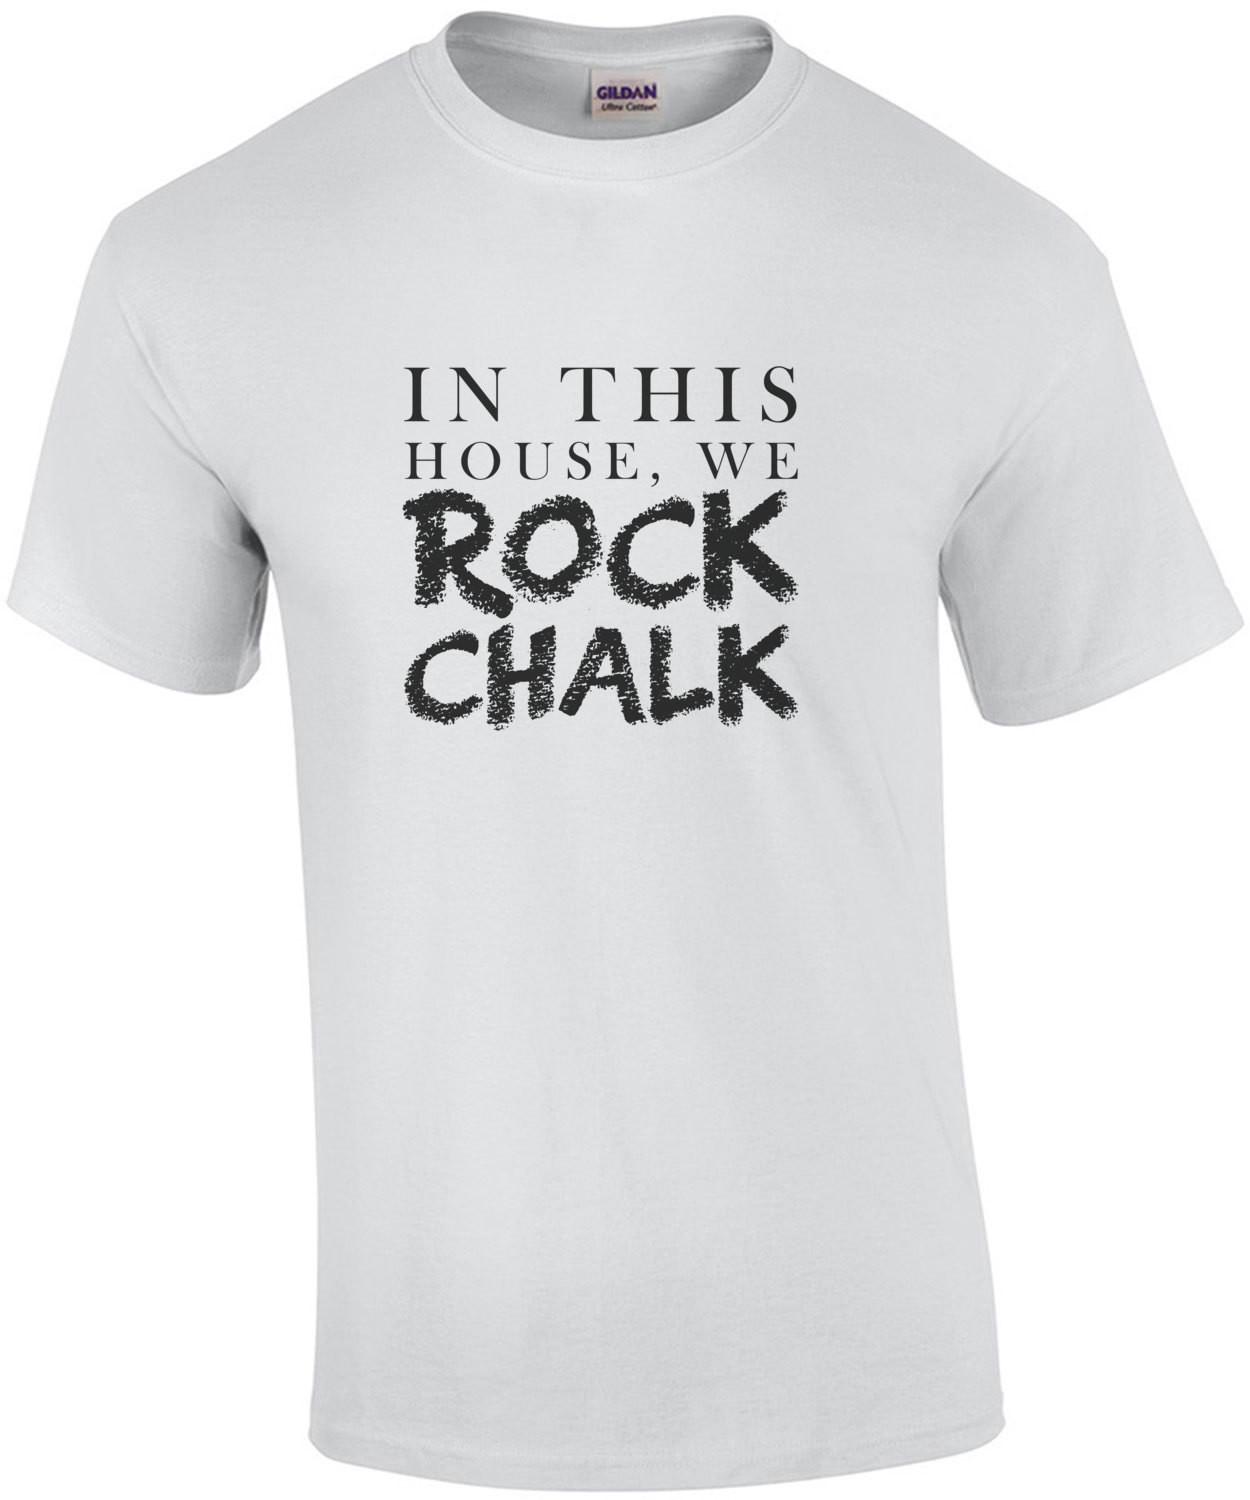 In this house, we rock chalk - Kansas T-Shirt